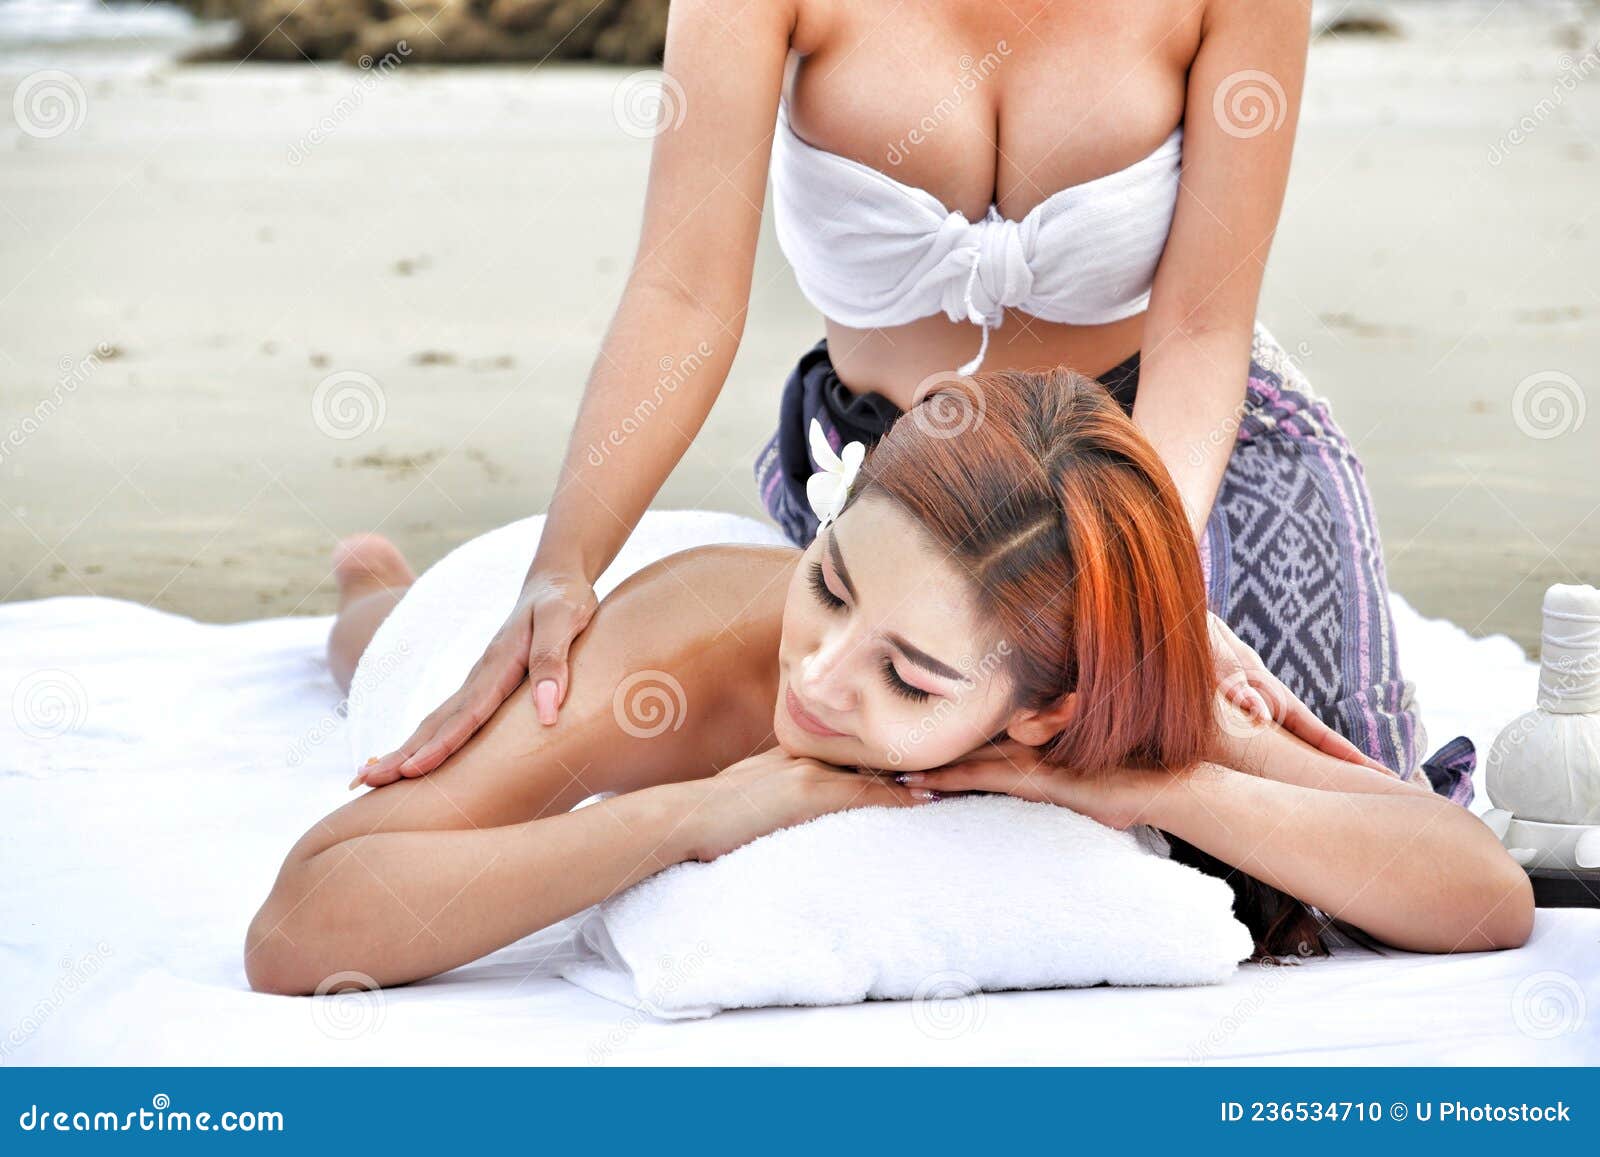 anne leahy add asian hot massage photo